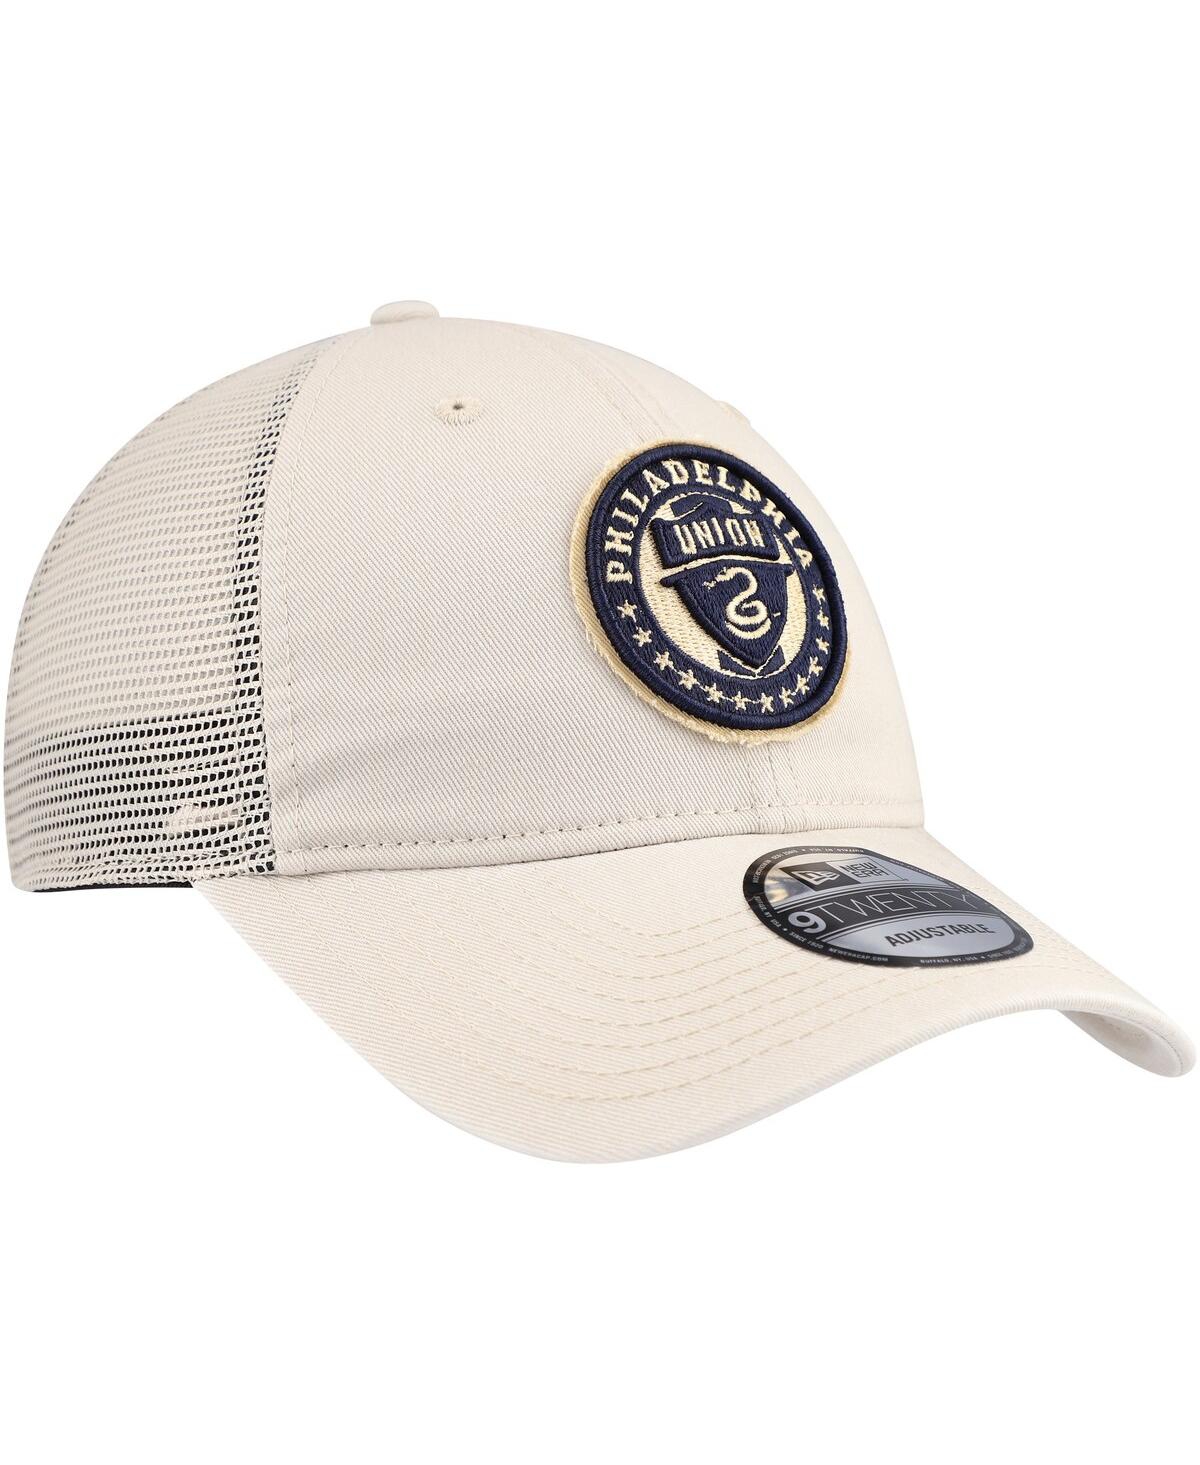 Shop New Era Men's Tan Philadelphia Union Game Day 9twenty Adjustable Trucker Hat